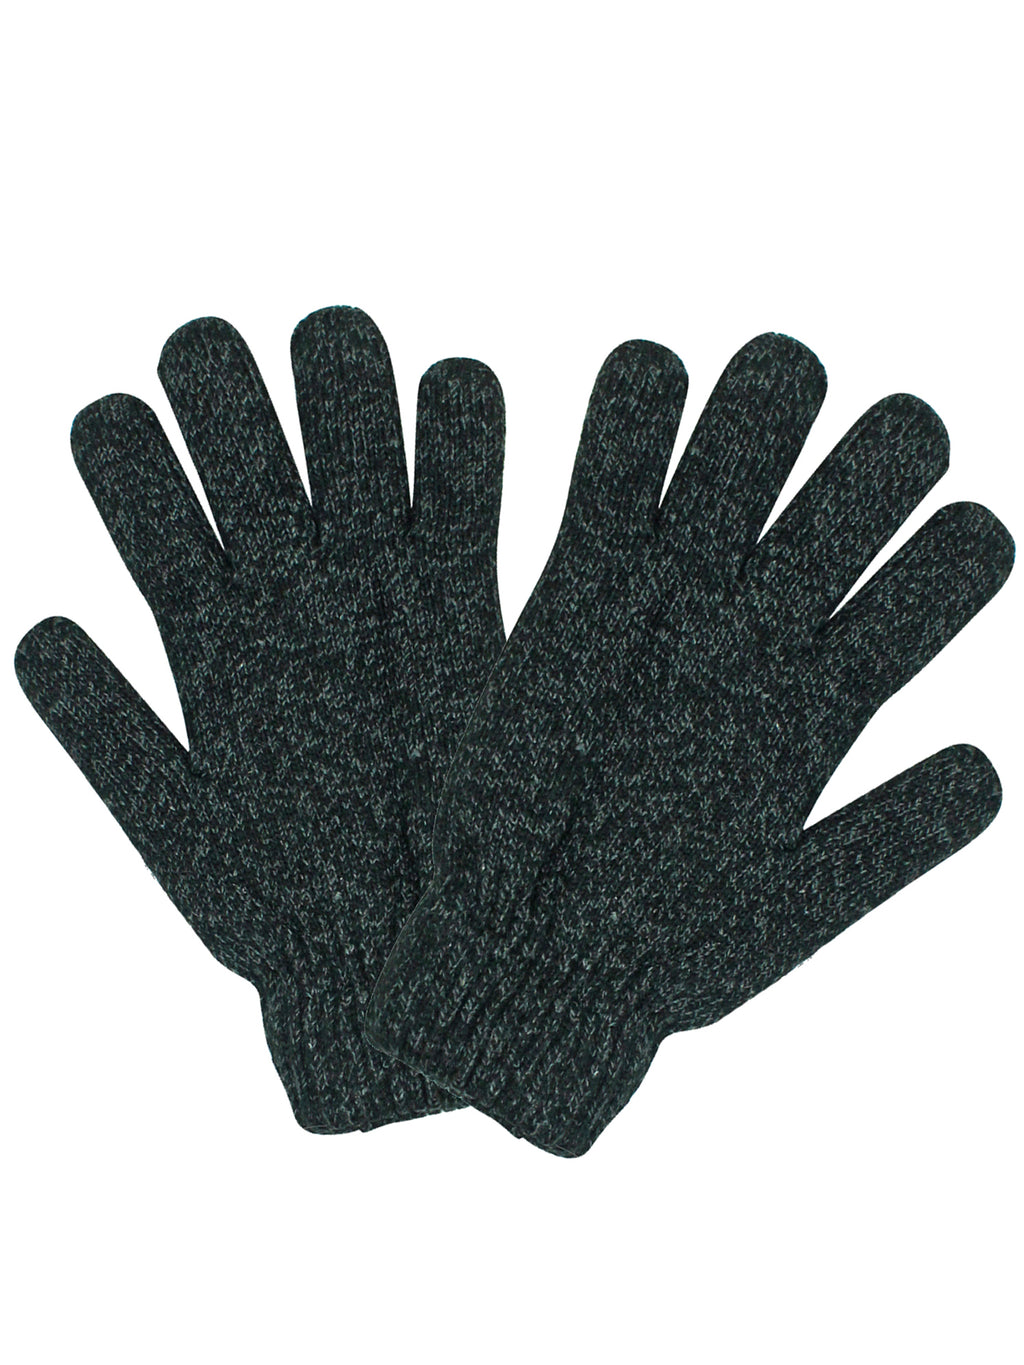 Mens 2 Pack Black & Gray Heavy Knit Winter Gloves